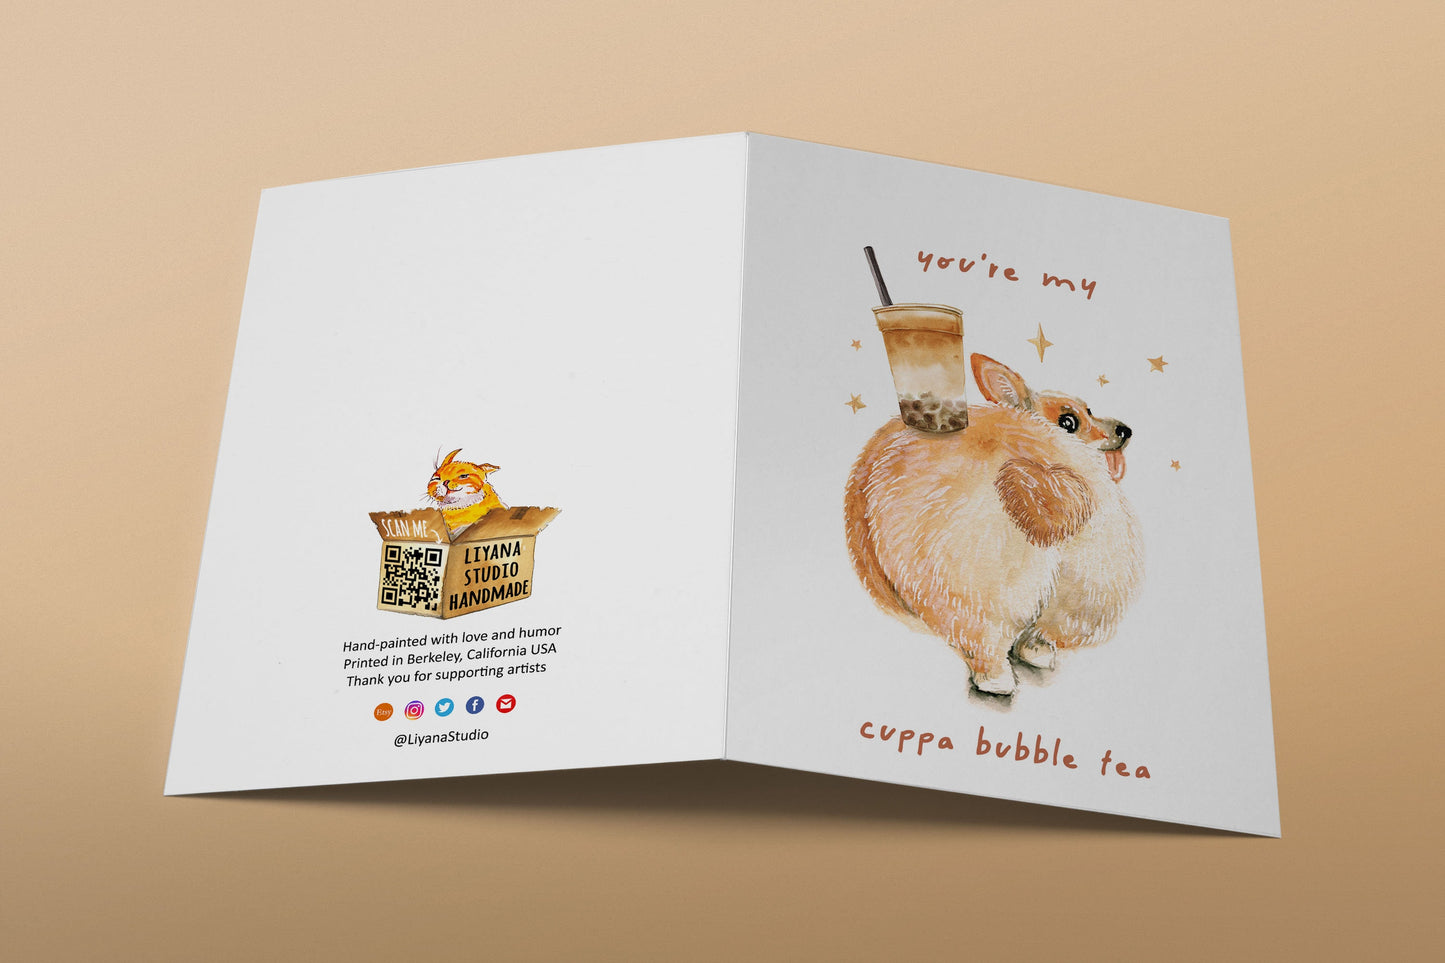 Corgi Boba Tea Valentines Day Card For Boyfriend - Cute Boba Card For Her - I Love You Card For Girlfriend